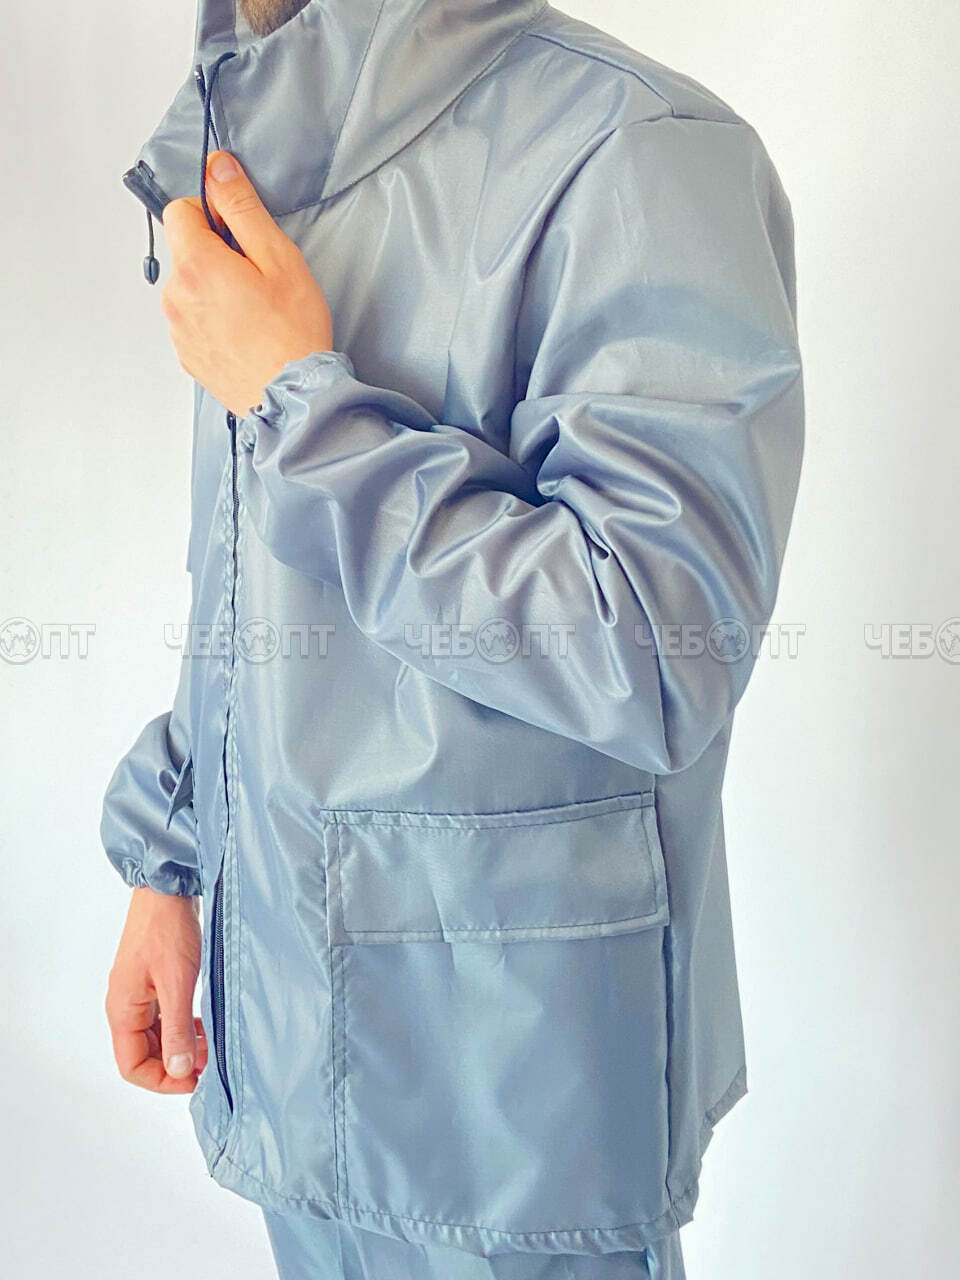 Костюм-дождевик (куртка, брюки),ЧЕБПРО,размер 52-54,100% полиэстер, Арт. ДожКостМуж/серый, МПС [15] СобПр. ЧЕБОПТ.